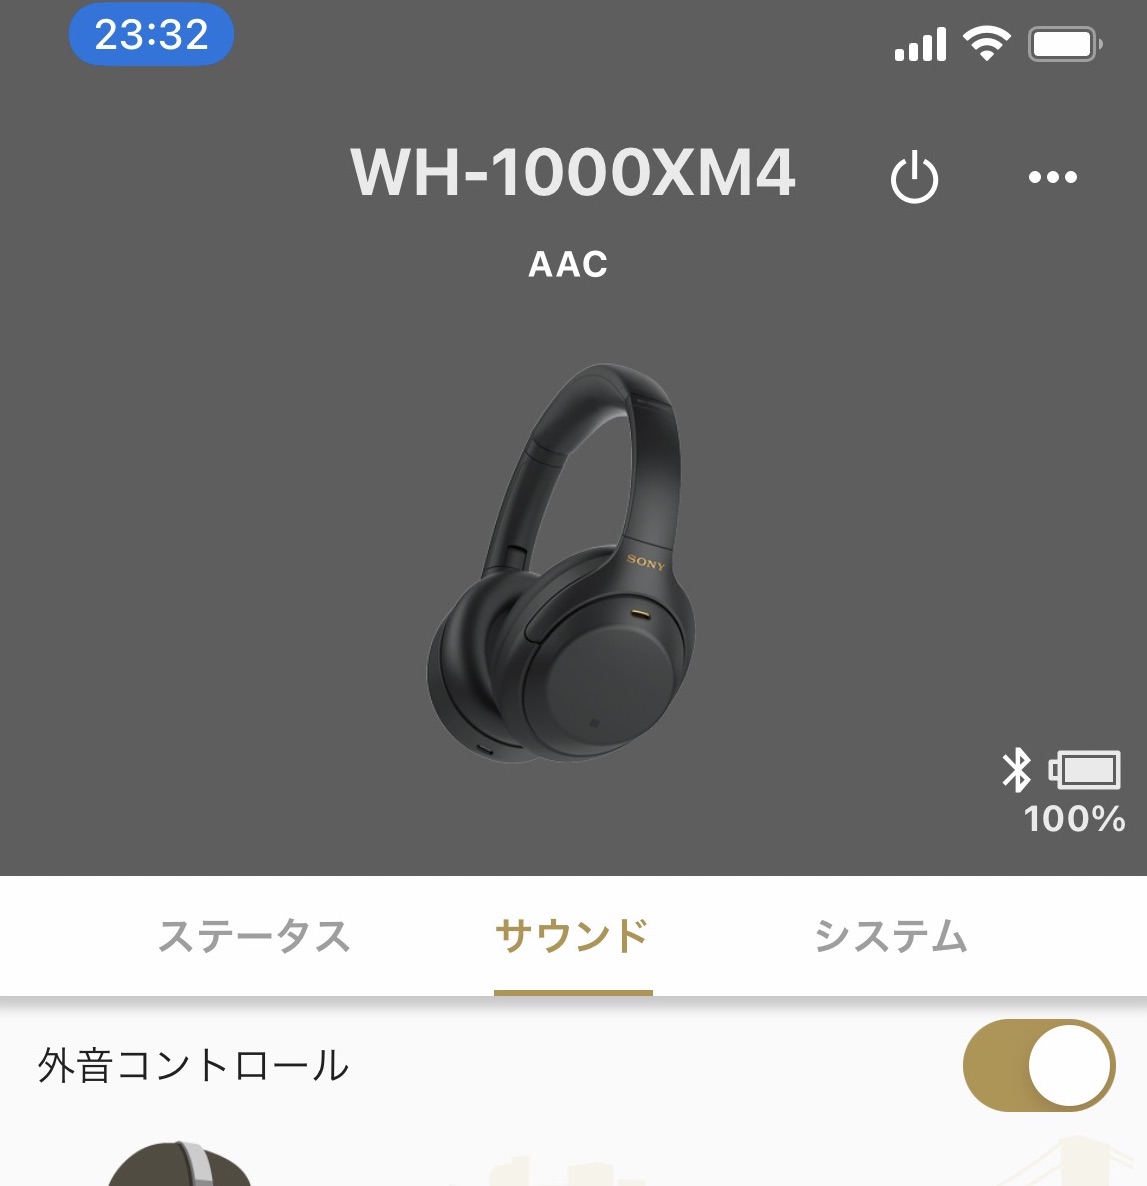 headphones connect